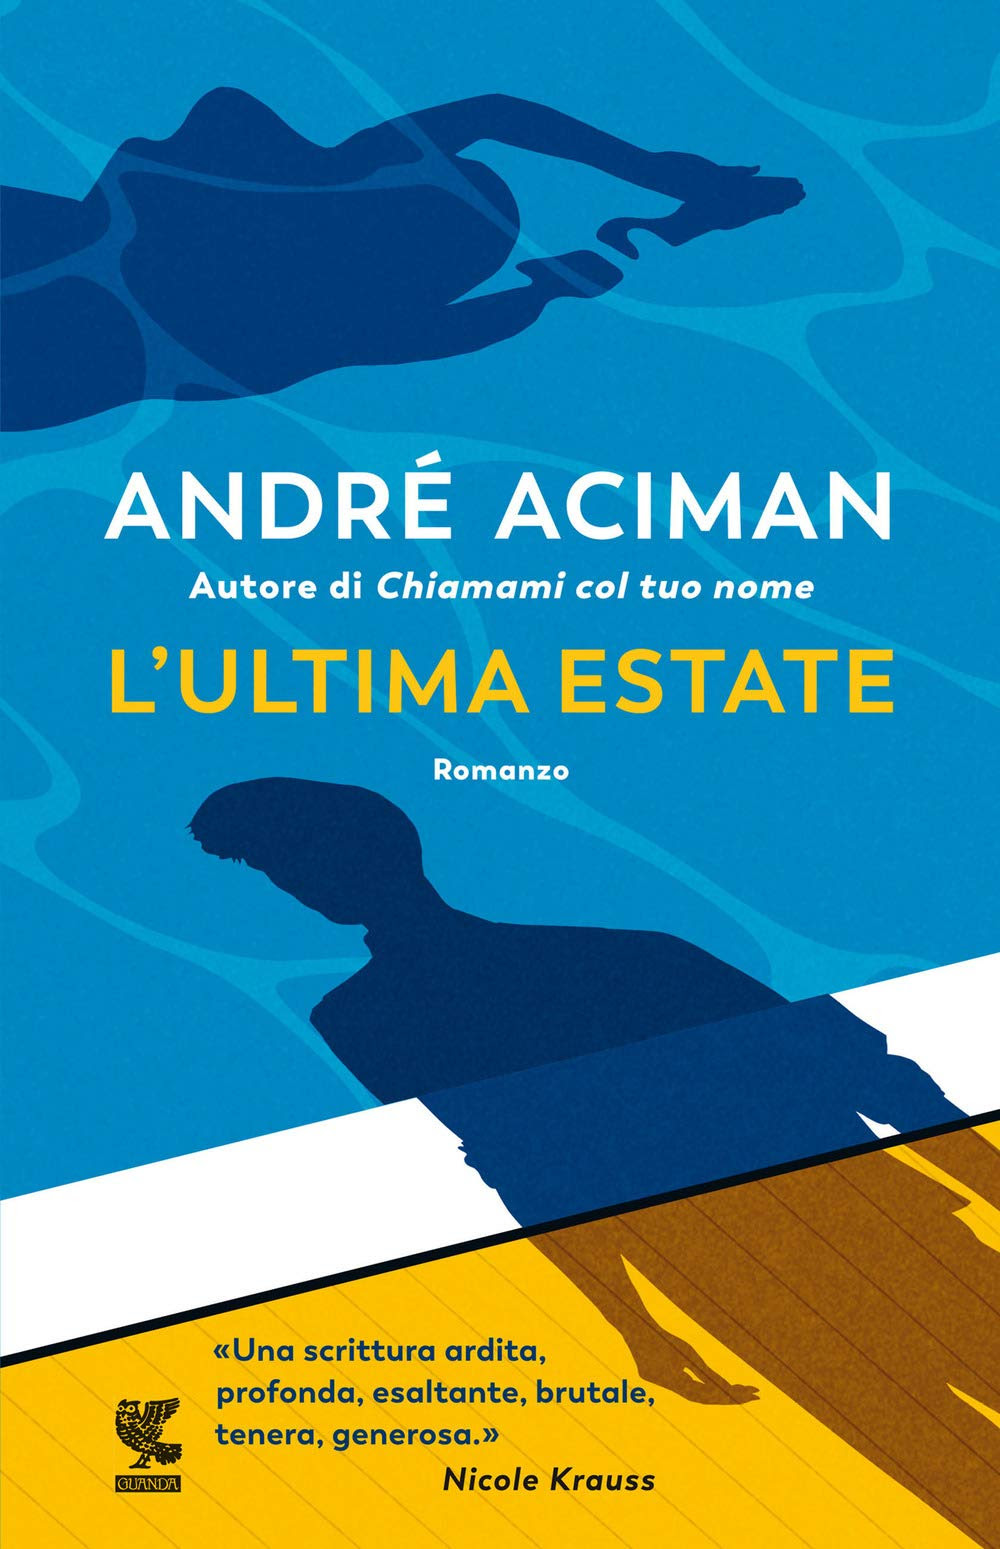 L'ultima estate in Kindle/PDF/EPUB